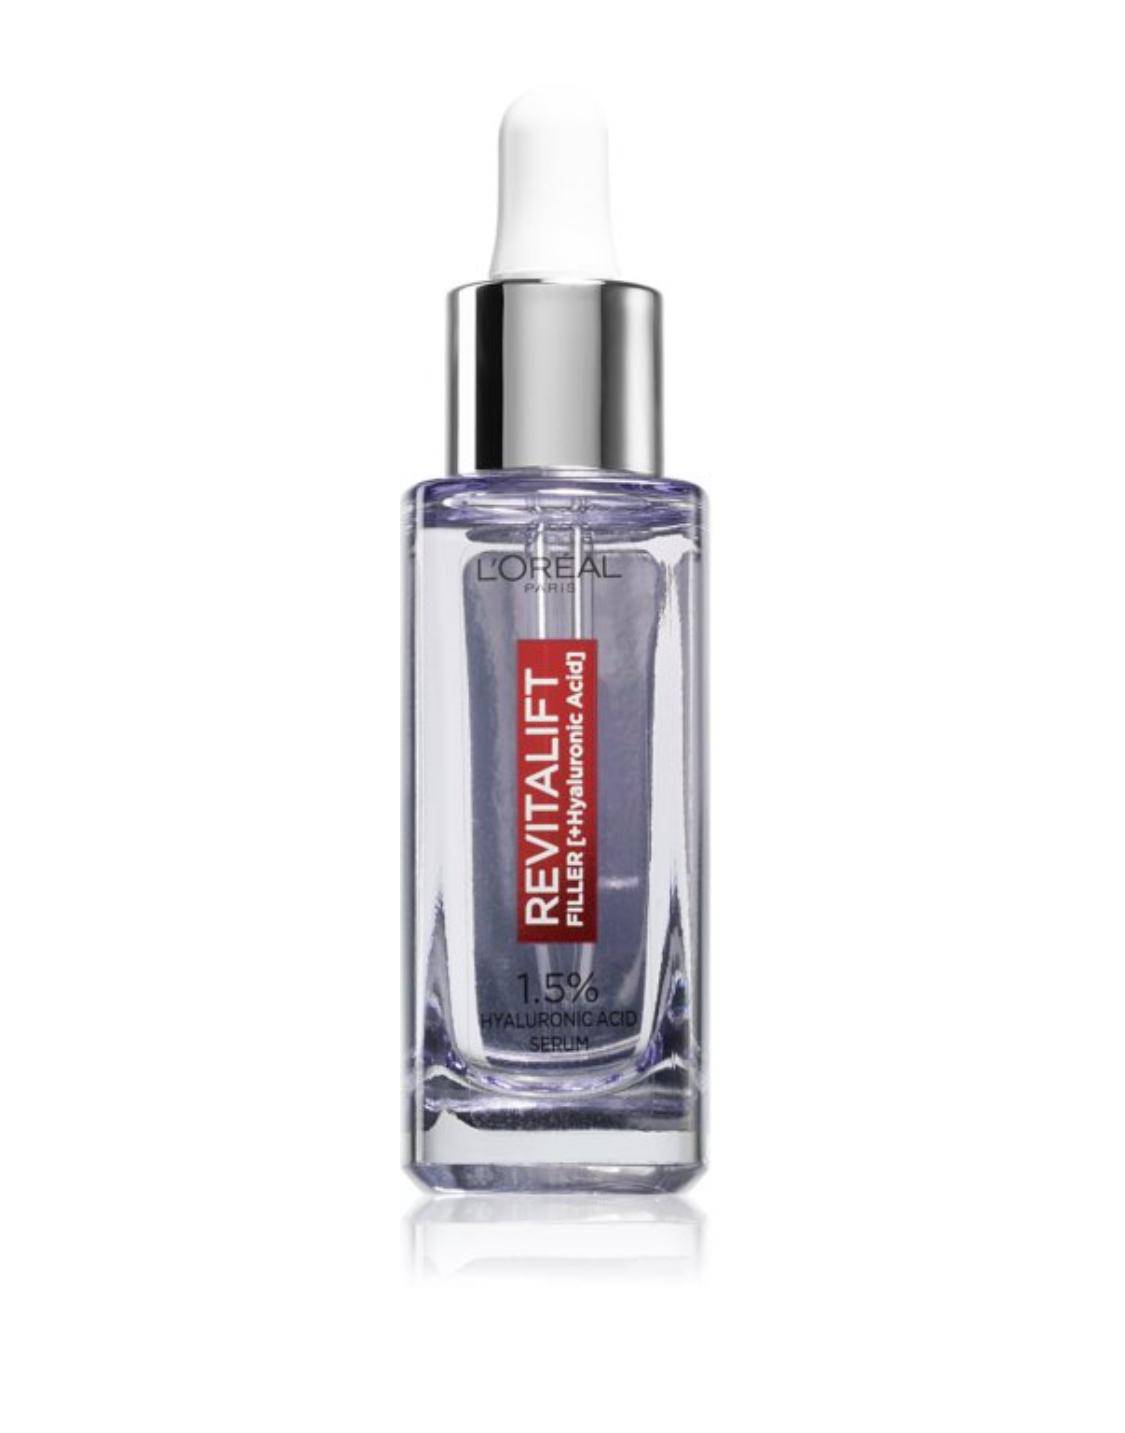 L&#39;Oréal Revitalift Filler, Siero anti- rughe - Jasmine Parfums- [ean]